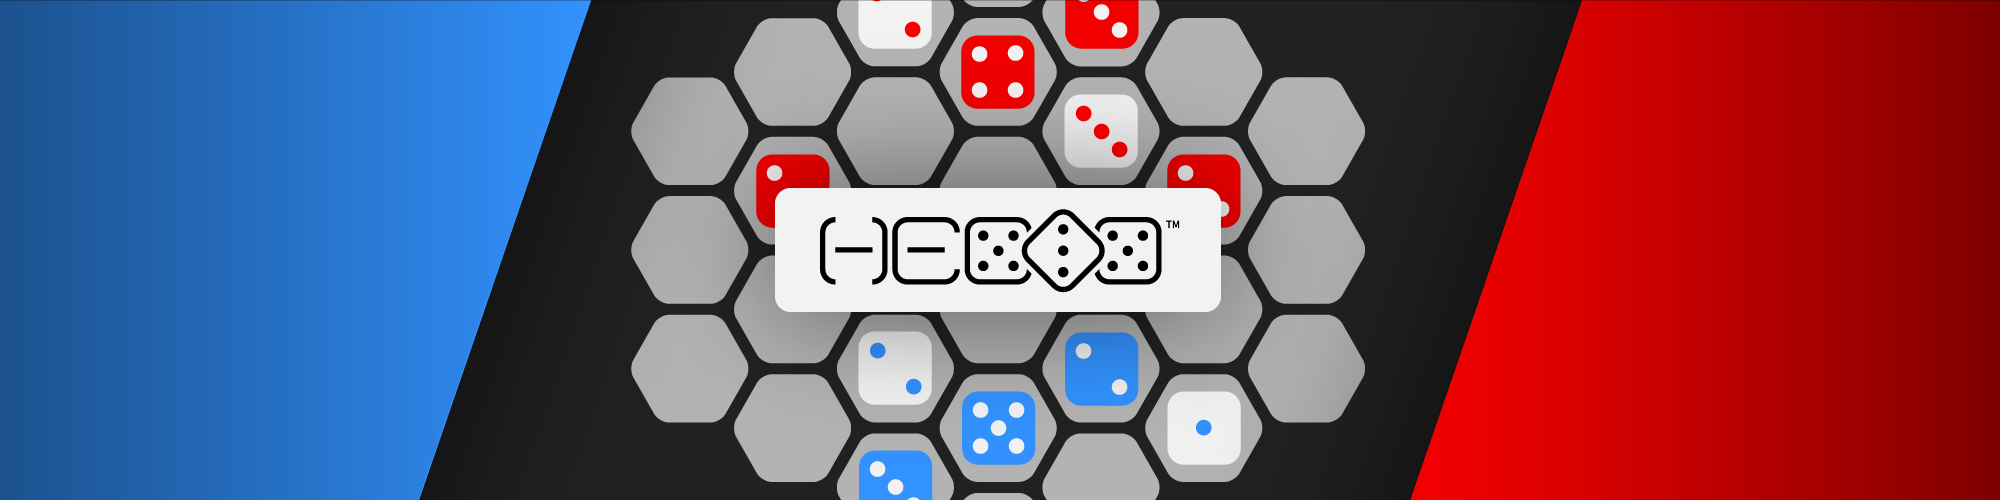 hexix logo displayed over hexix board